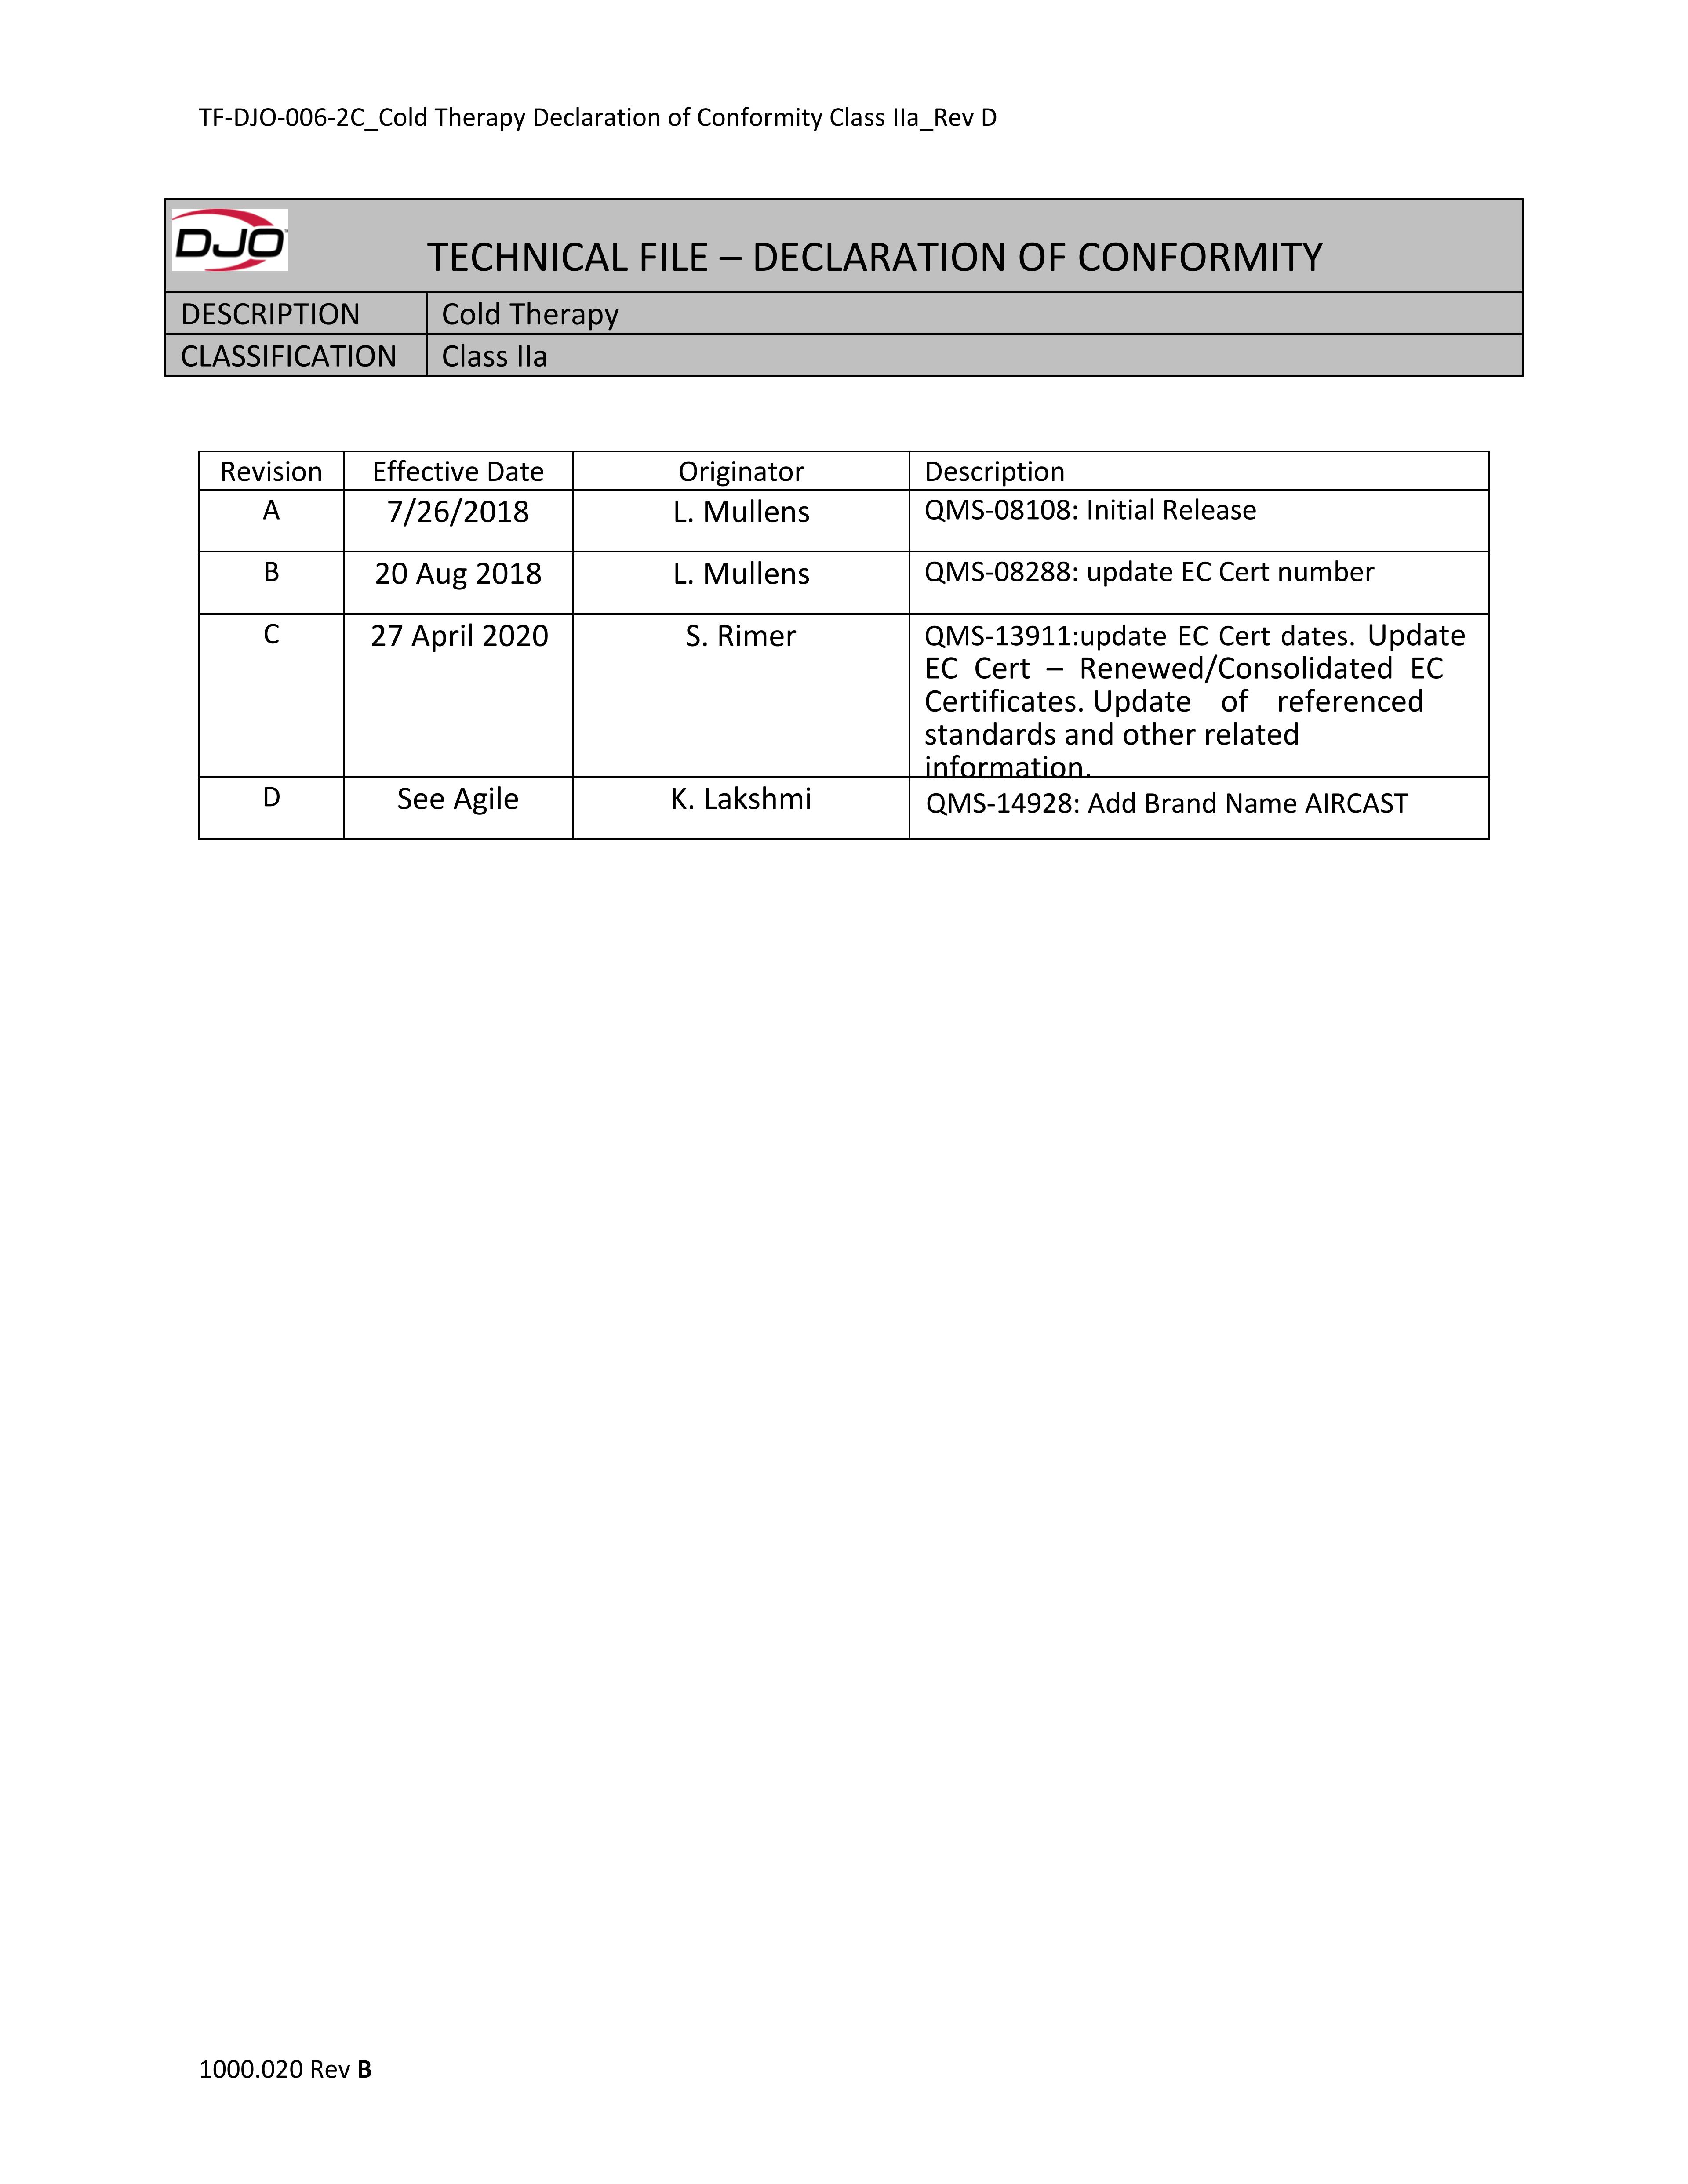 TF-DJO-006-2C_Cold Therapy_Class IIa Rev D.pdf